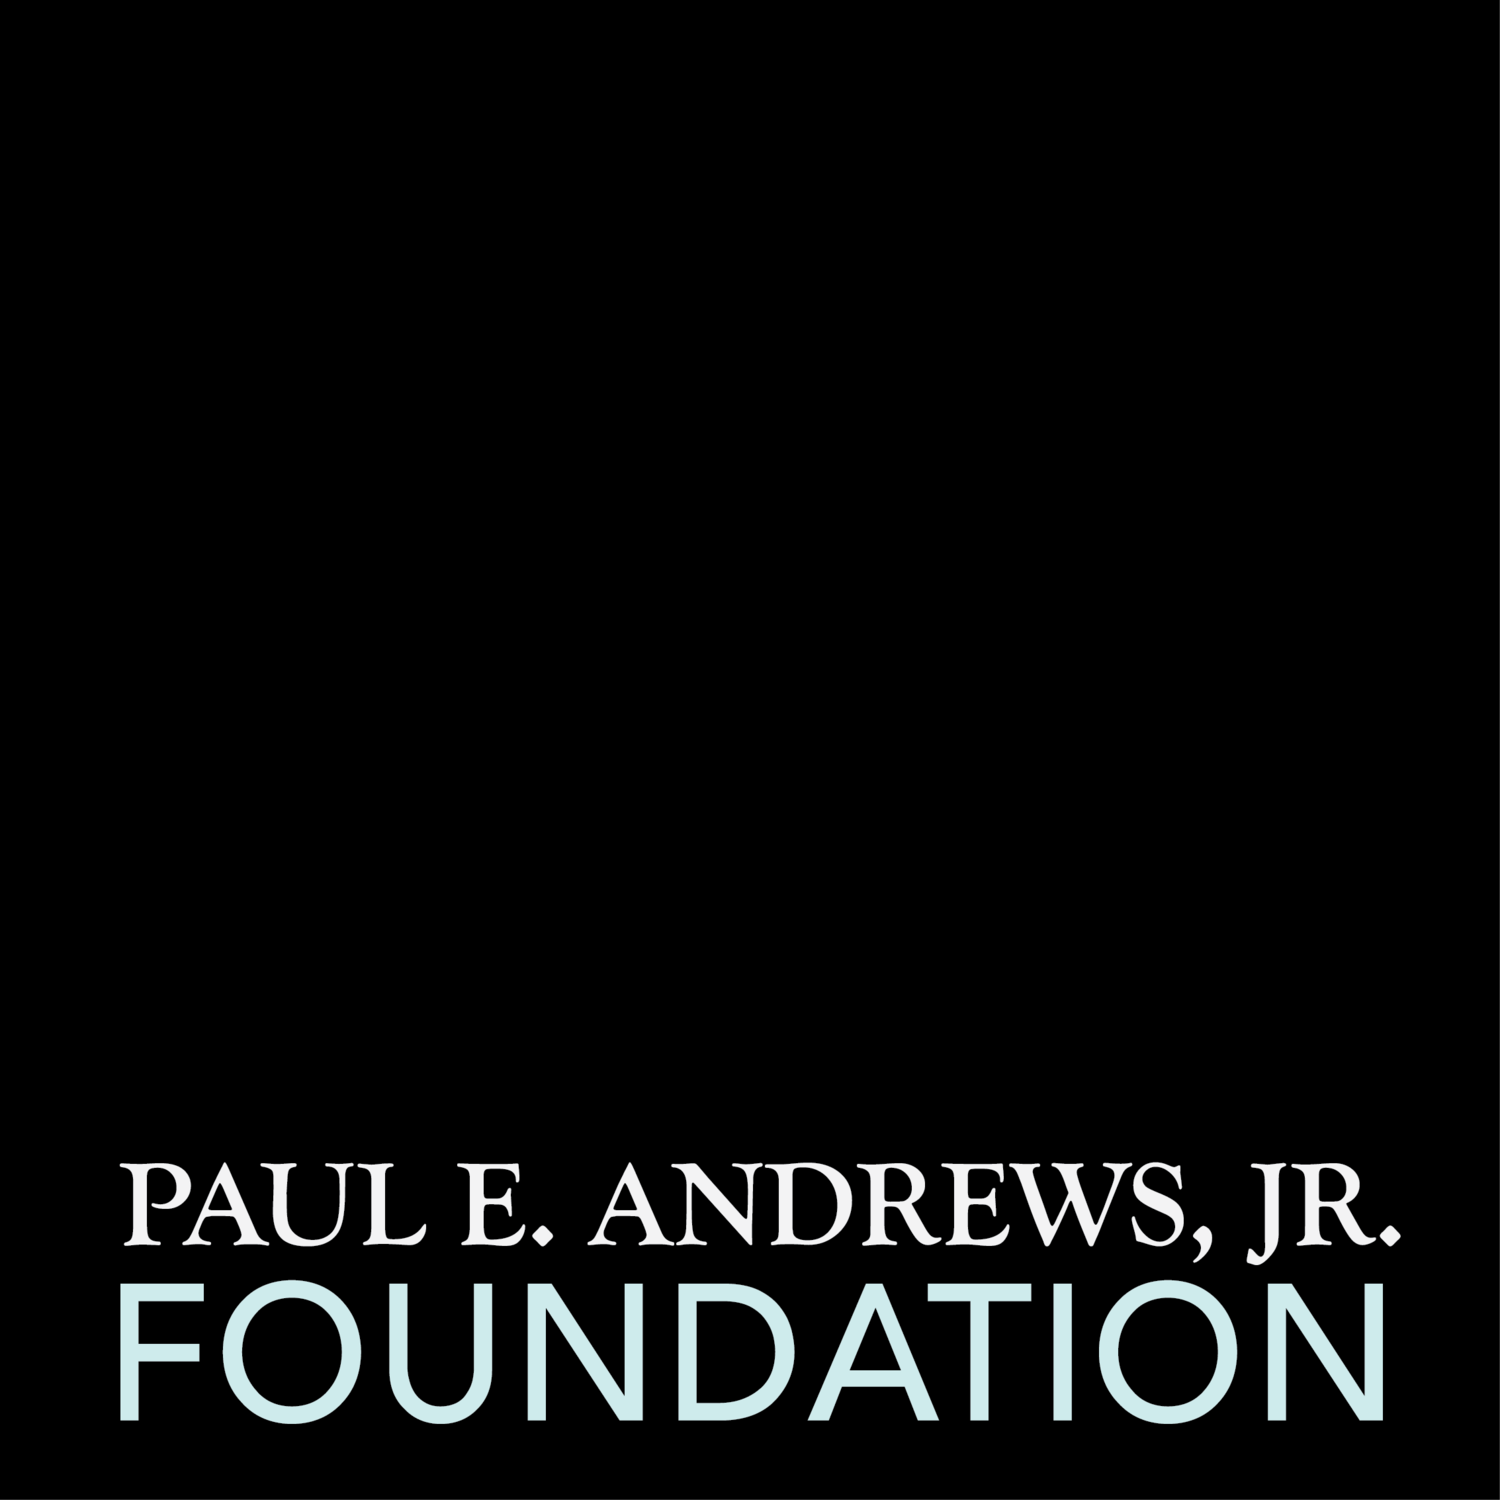 Paul E. Andrews, Jr. Foundation